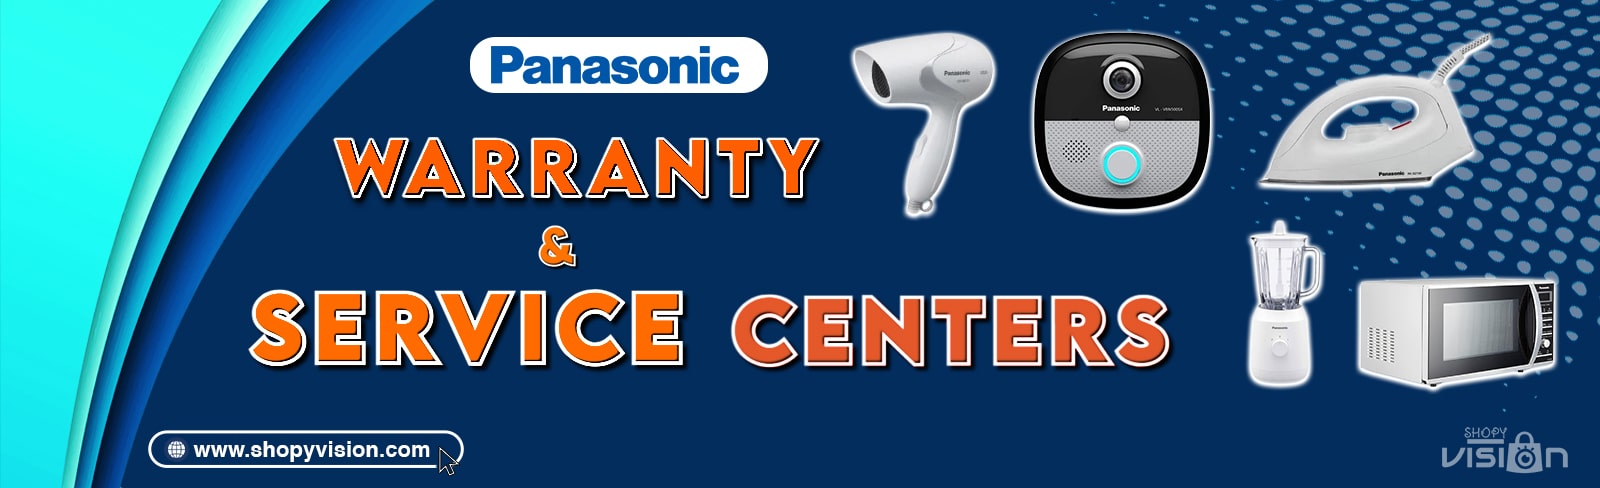 Panasonic Warranty &Service Centers Banner